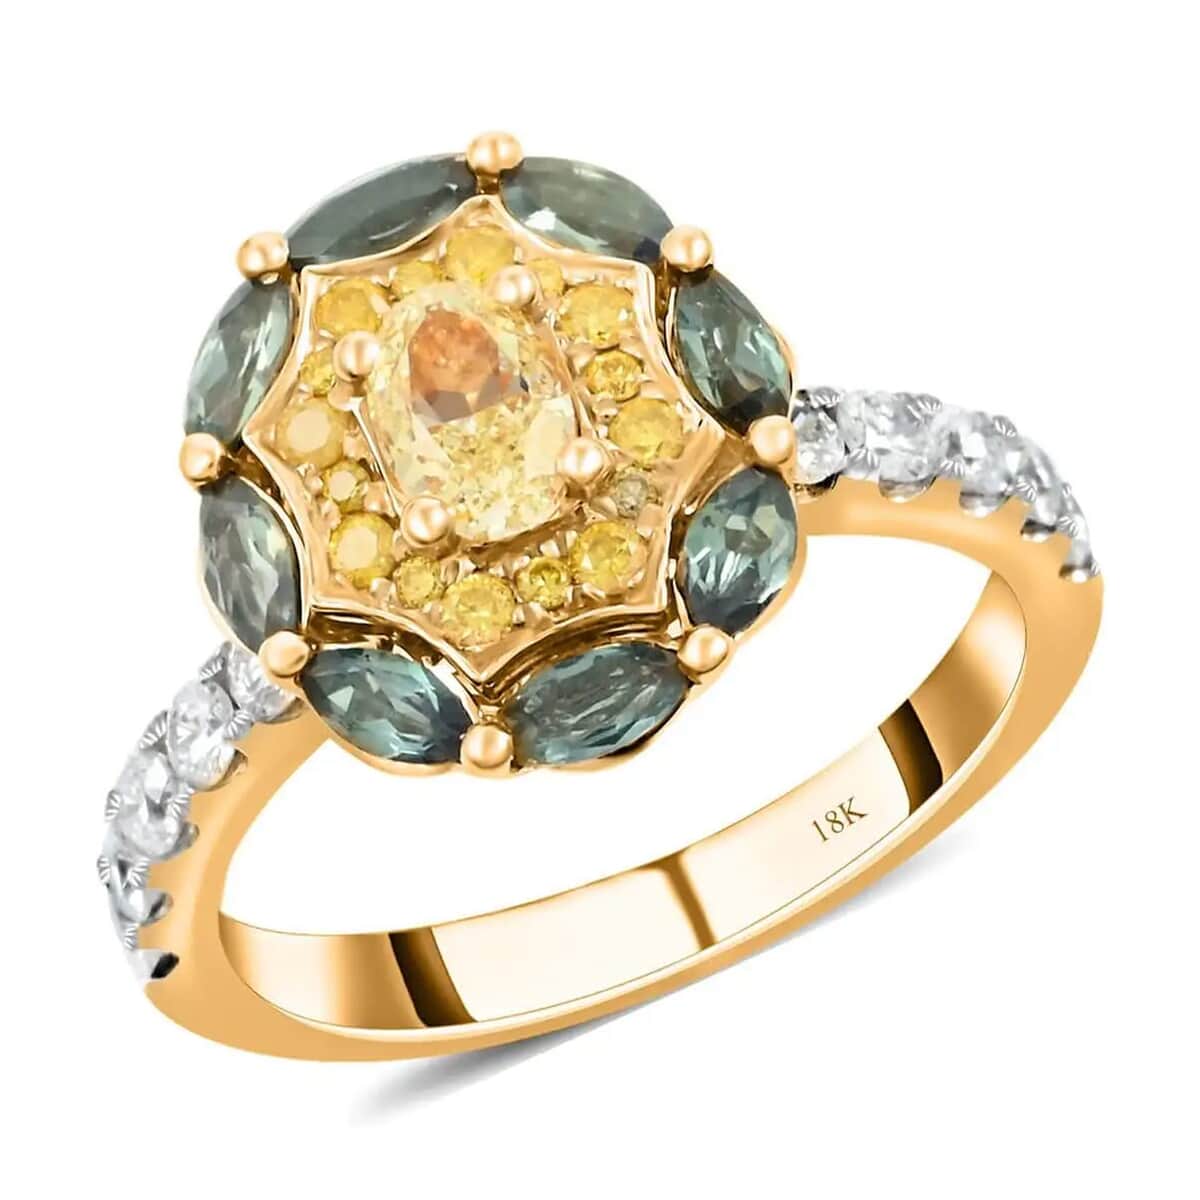 Ankur Treasure Chest Modani 18K Yellow Gold Natural Yellow and White Diamond, Narsipatnam Alexandrite Ring (Size 6.0) 5.15 Grams 1.40 ctw image number 0